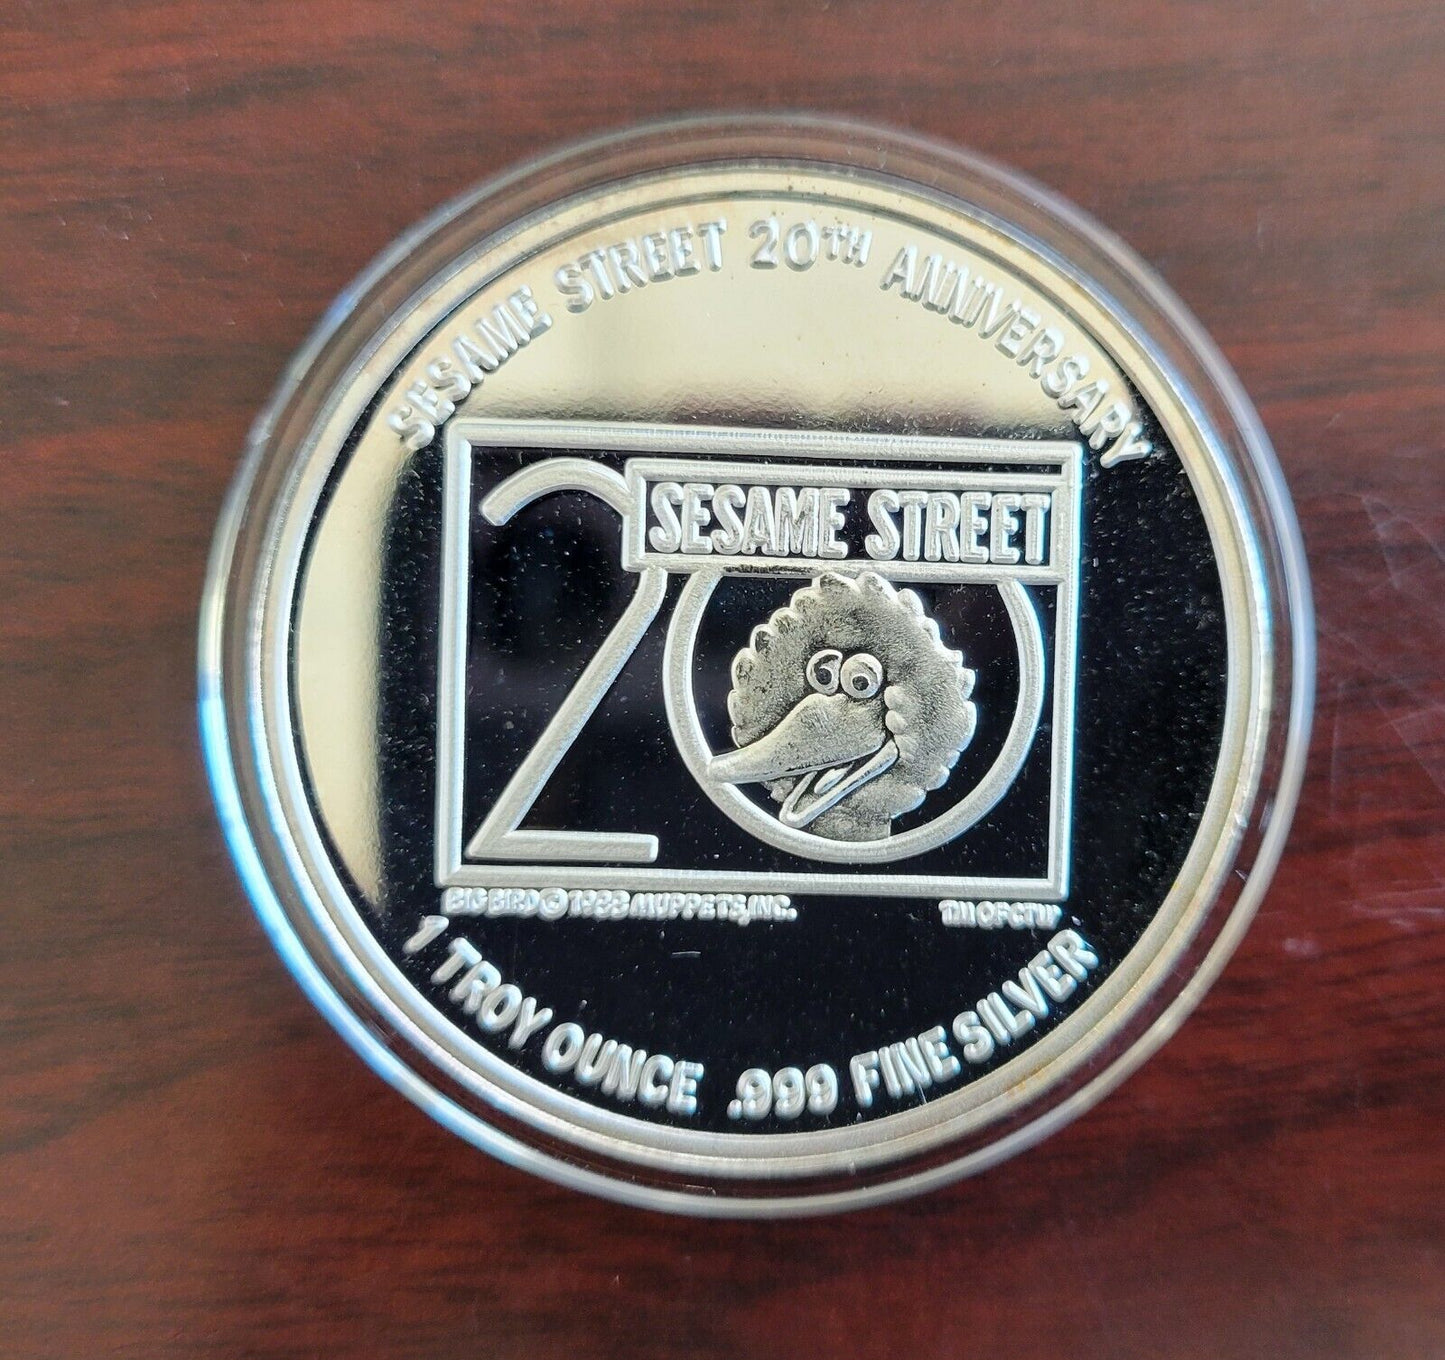 Oscar Sesame Street 20th Anniversary Enameled 1oz. Silver Round .999 Fine